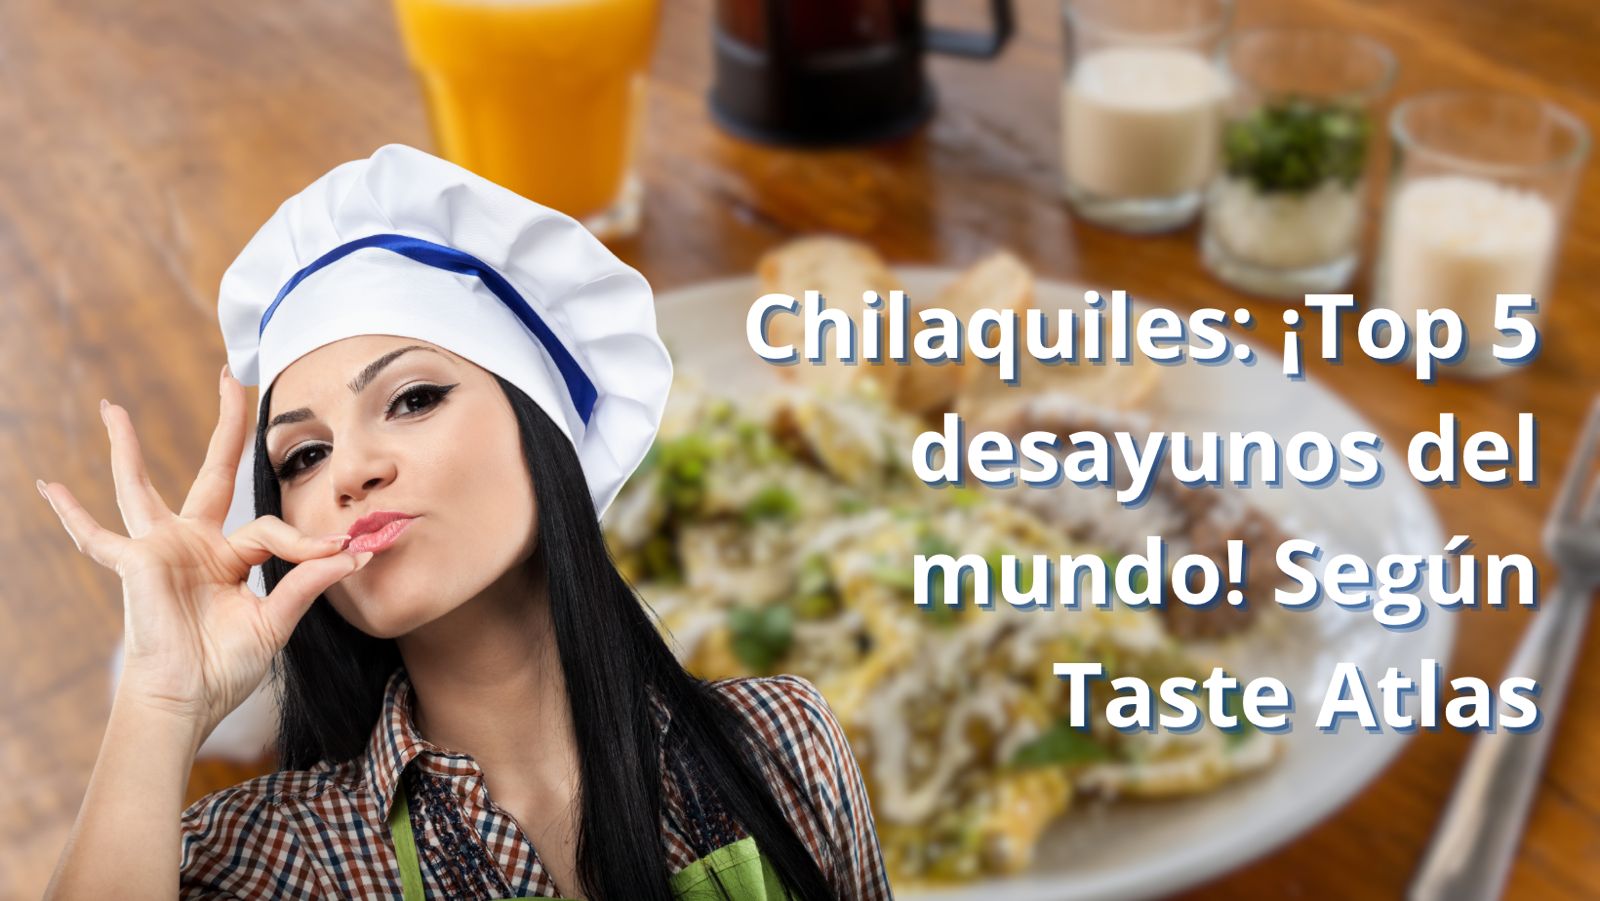 Chilaquiles Taste Atlas